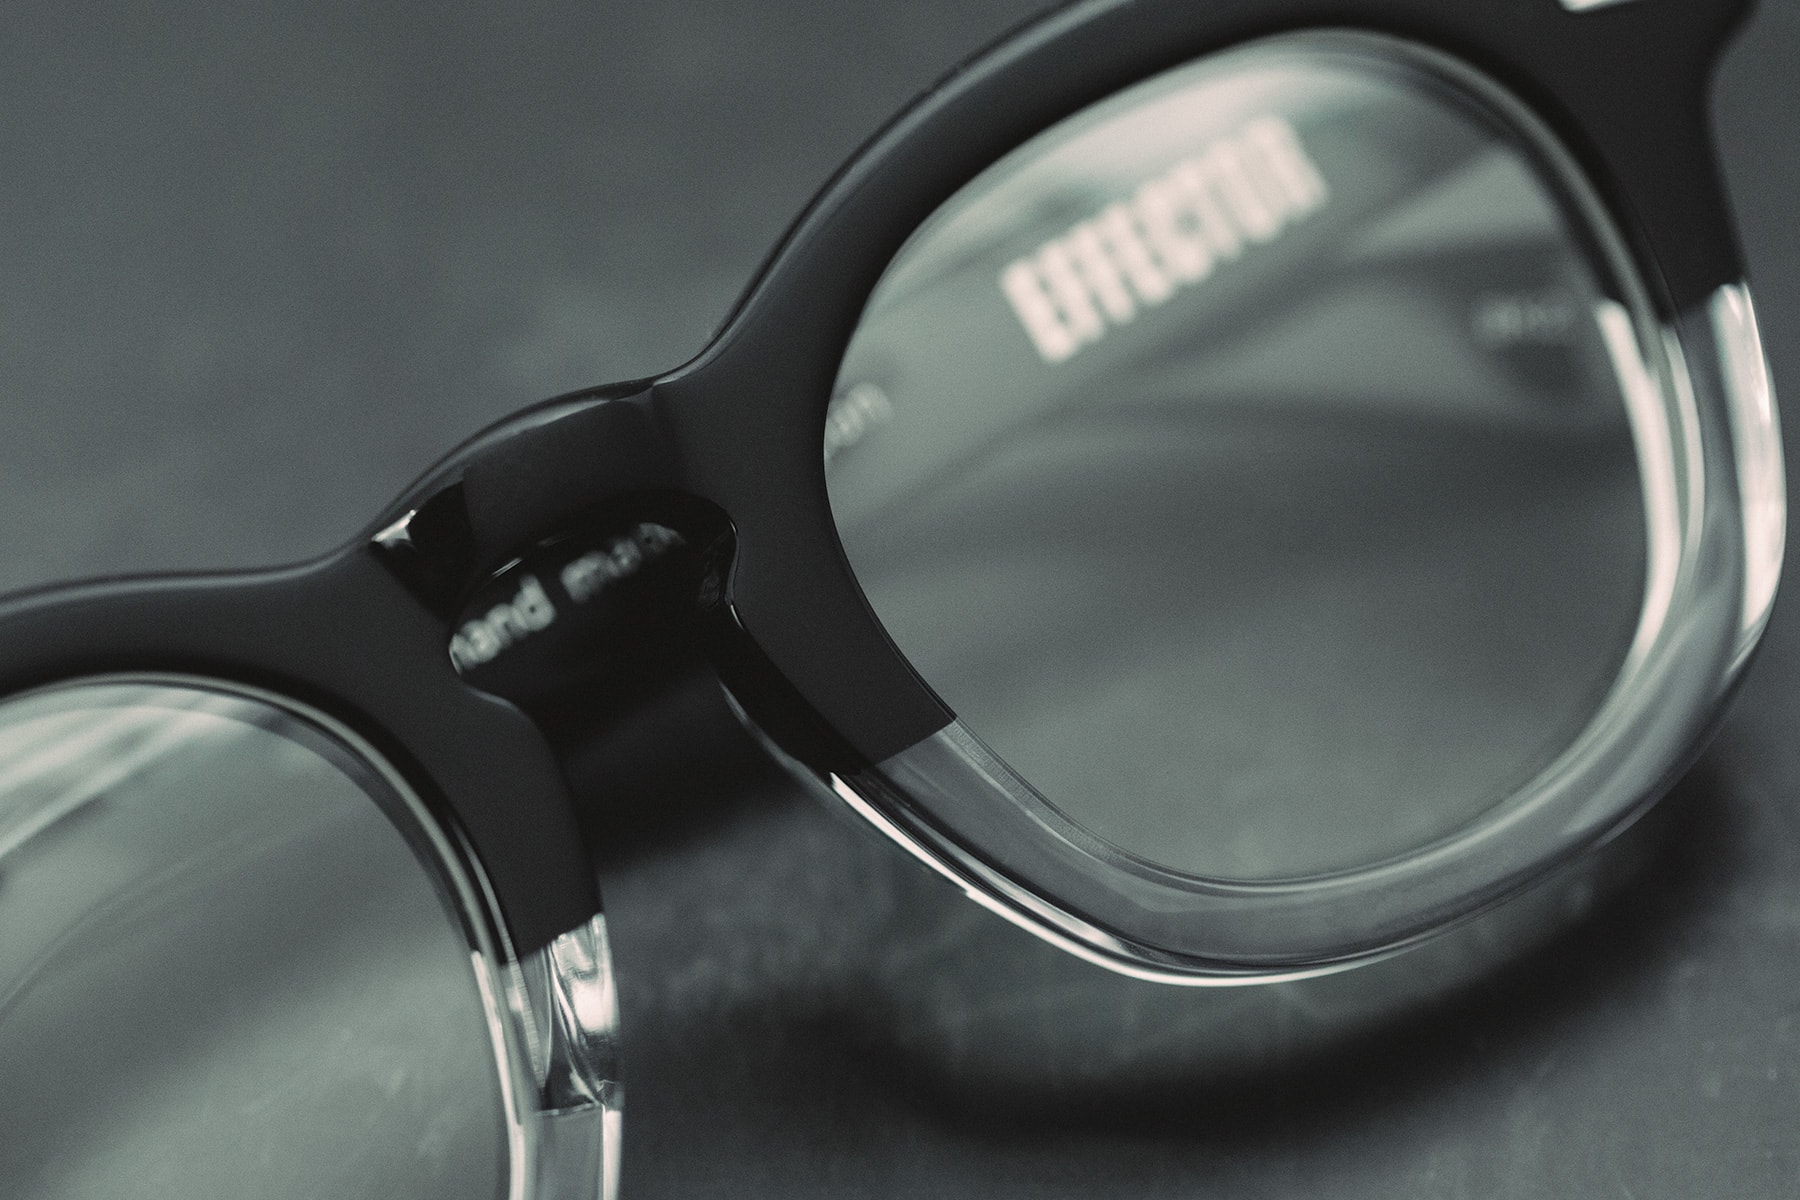 EFFECTOR x BOSS 40 周年聯名紀念眼鏡